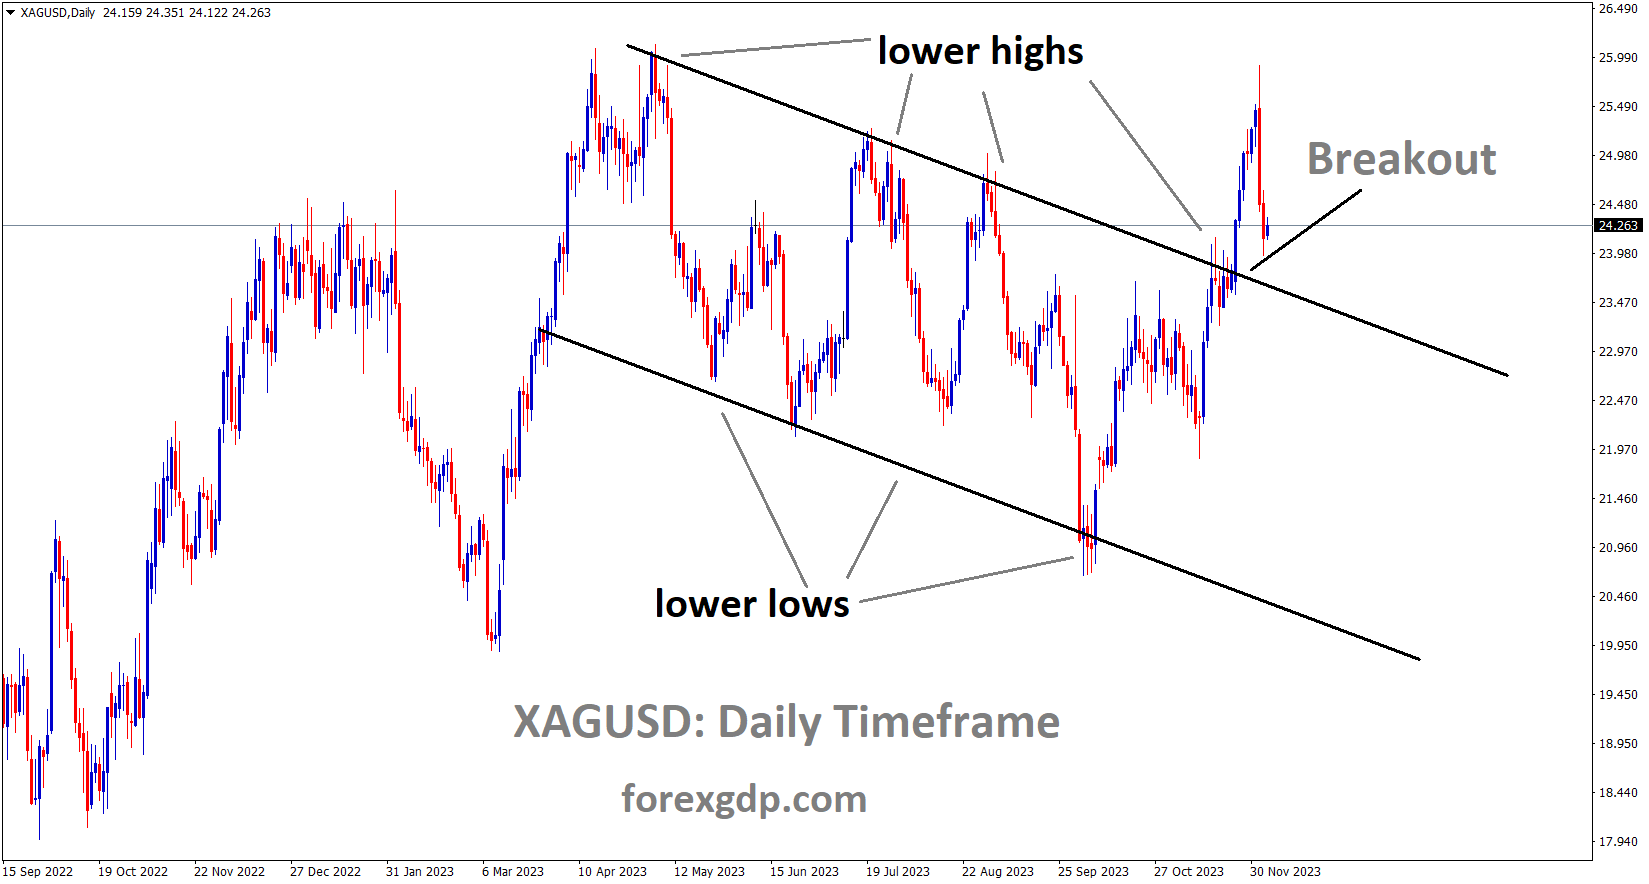 XAGUSD Silver price has broken the Descending channel in upside